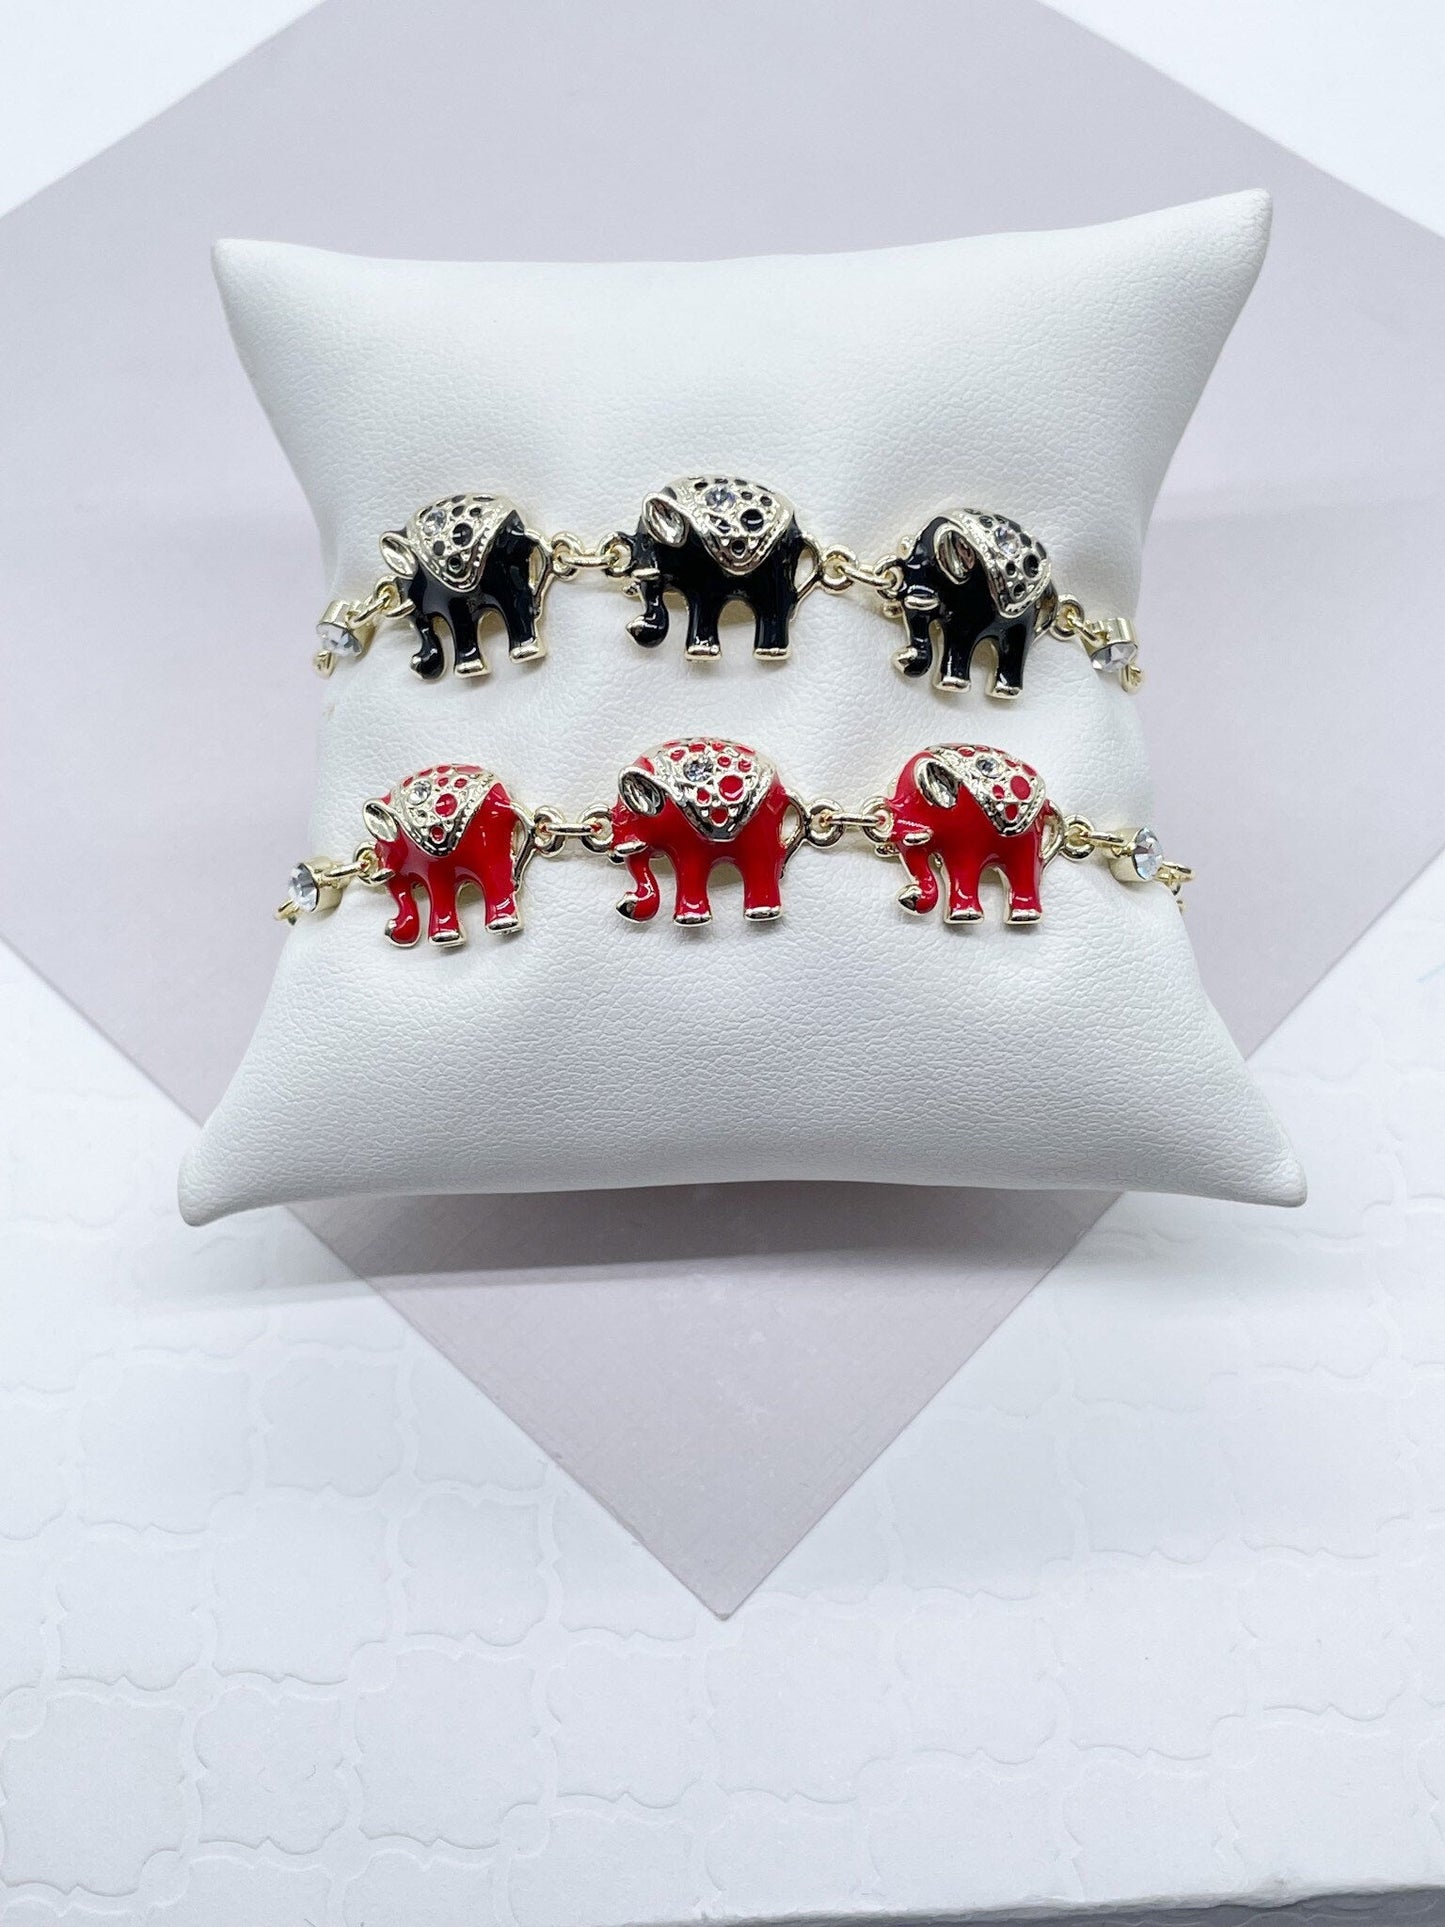 18k Gold Filled Multi Color Enamel Puffy Elephant Bracelets, Blue, Red, White